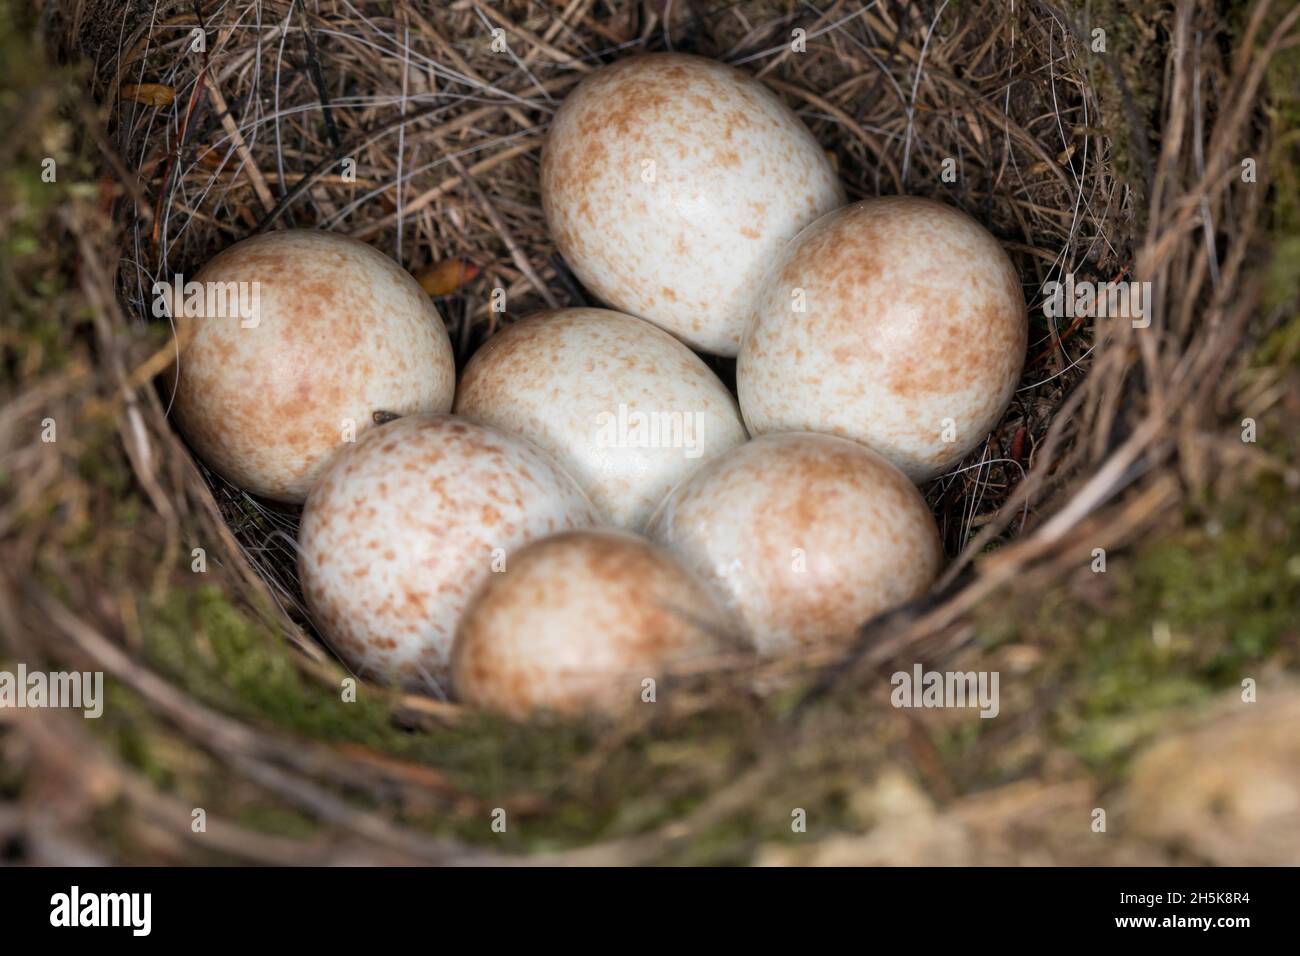 Rotkehlchen, Nest, Gelege, Eier, Ei, Erithacus rubecula, robin, European robin, robin redbreast, nest, eggs, egg, Le Rouge-gorge familier Stock Photo